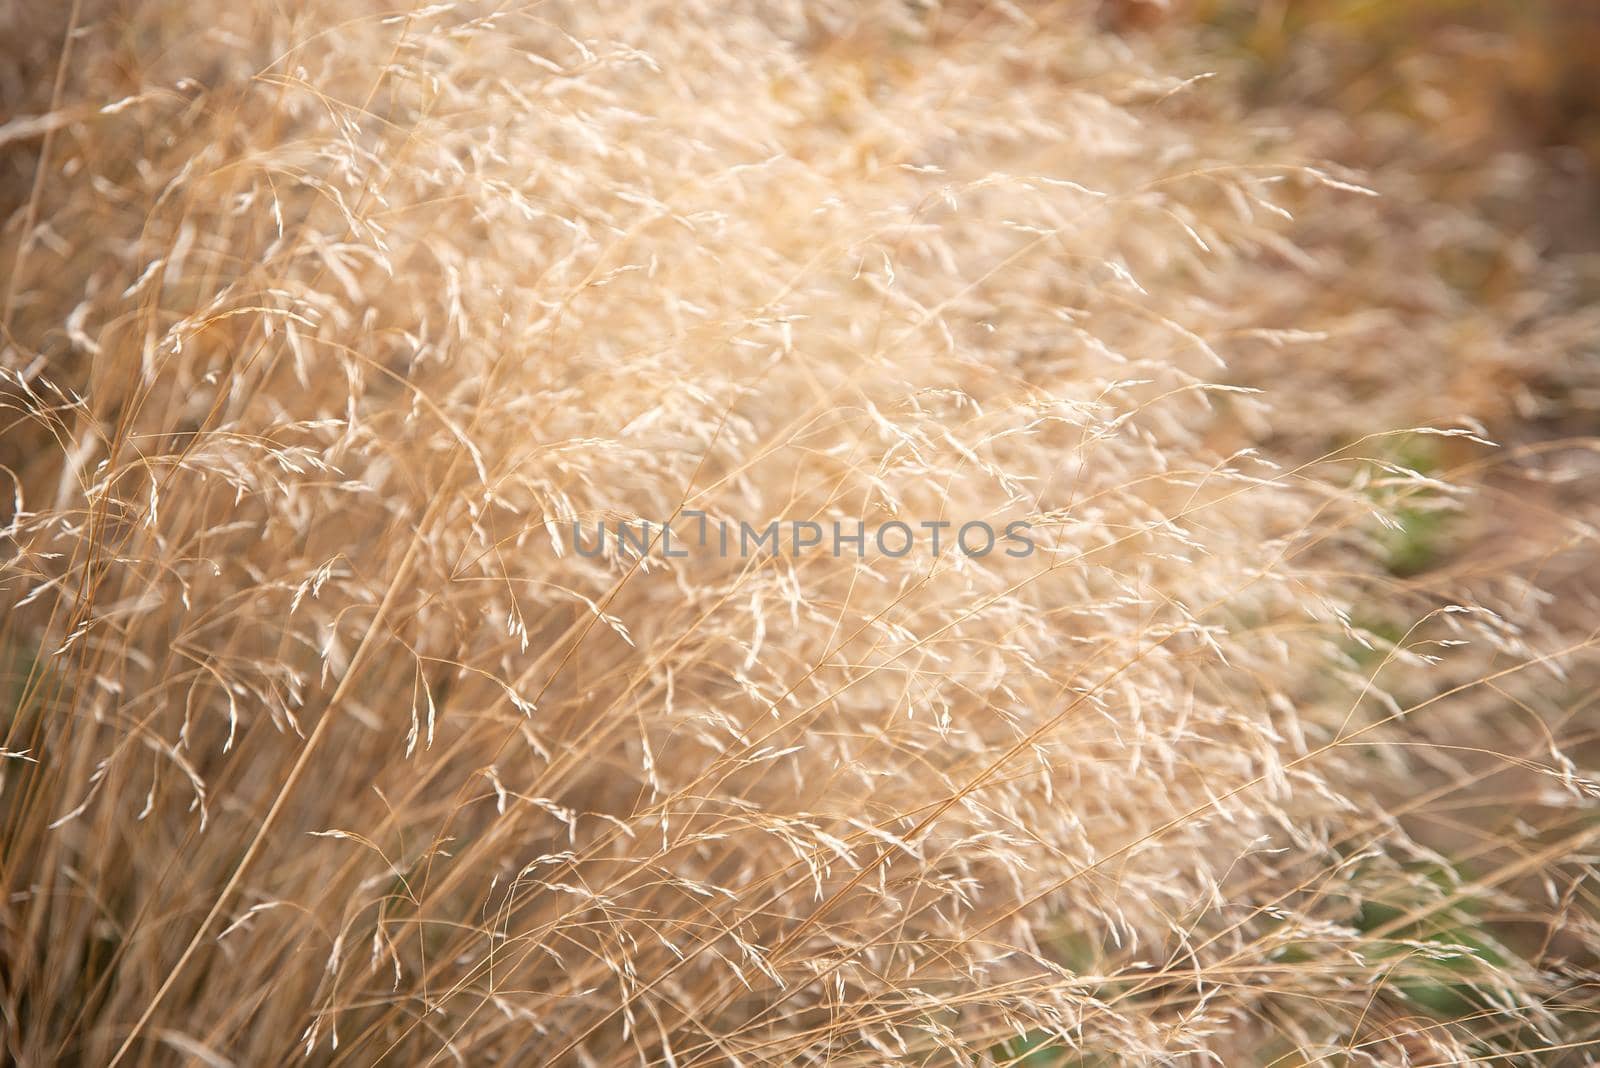 Ripe wild oat spilling in the wind on the field in hot summer